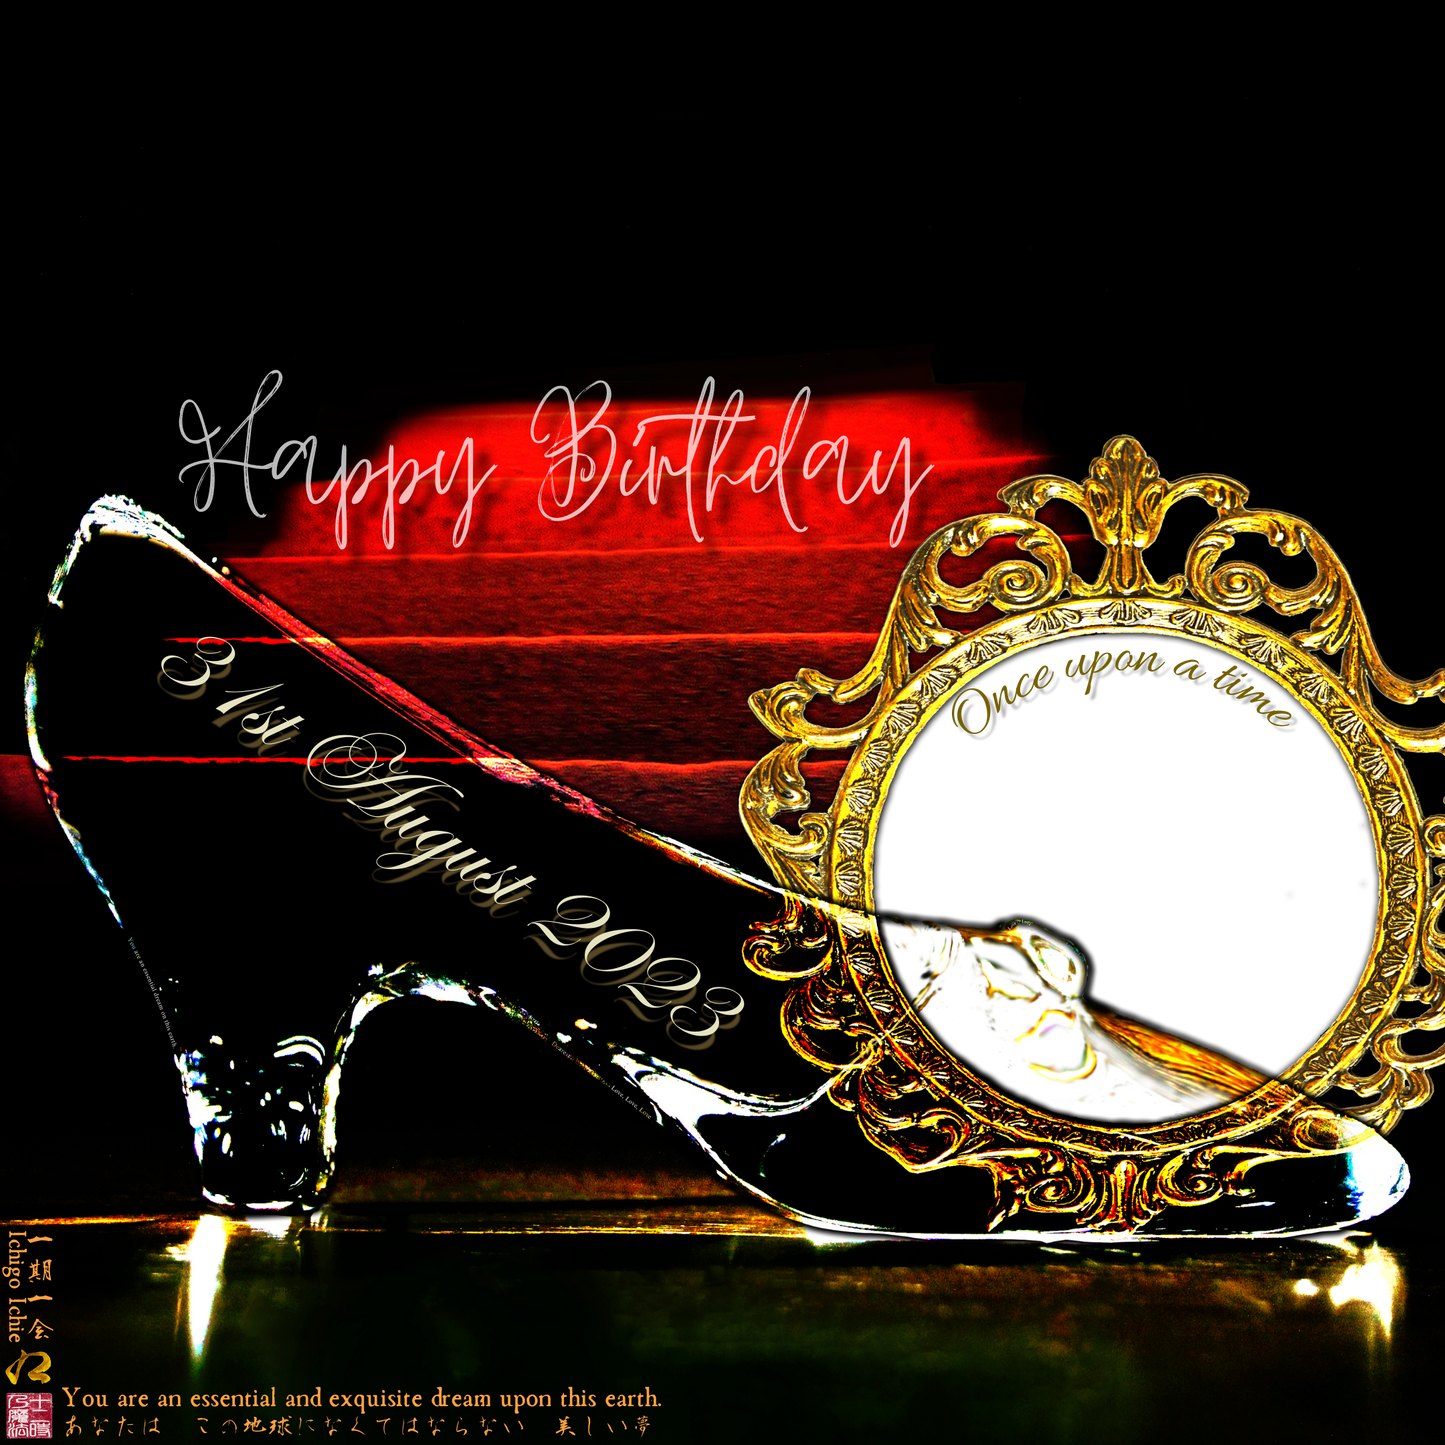 Happy Birthday Glass Slipper "Ichigo Ichie" 31st August 2023 the Right (1-of-1) NFT Art